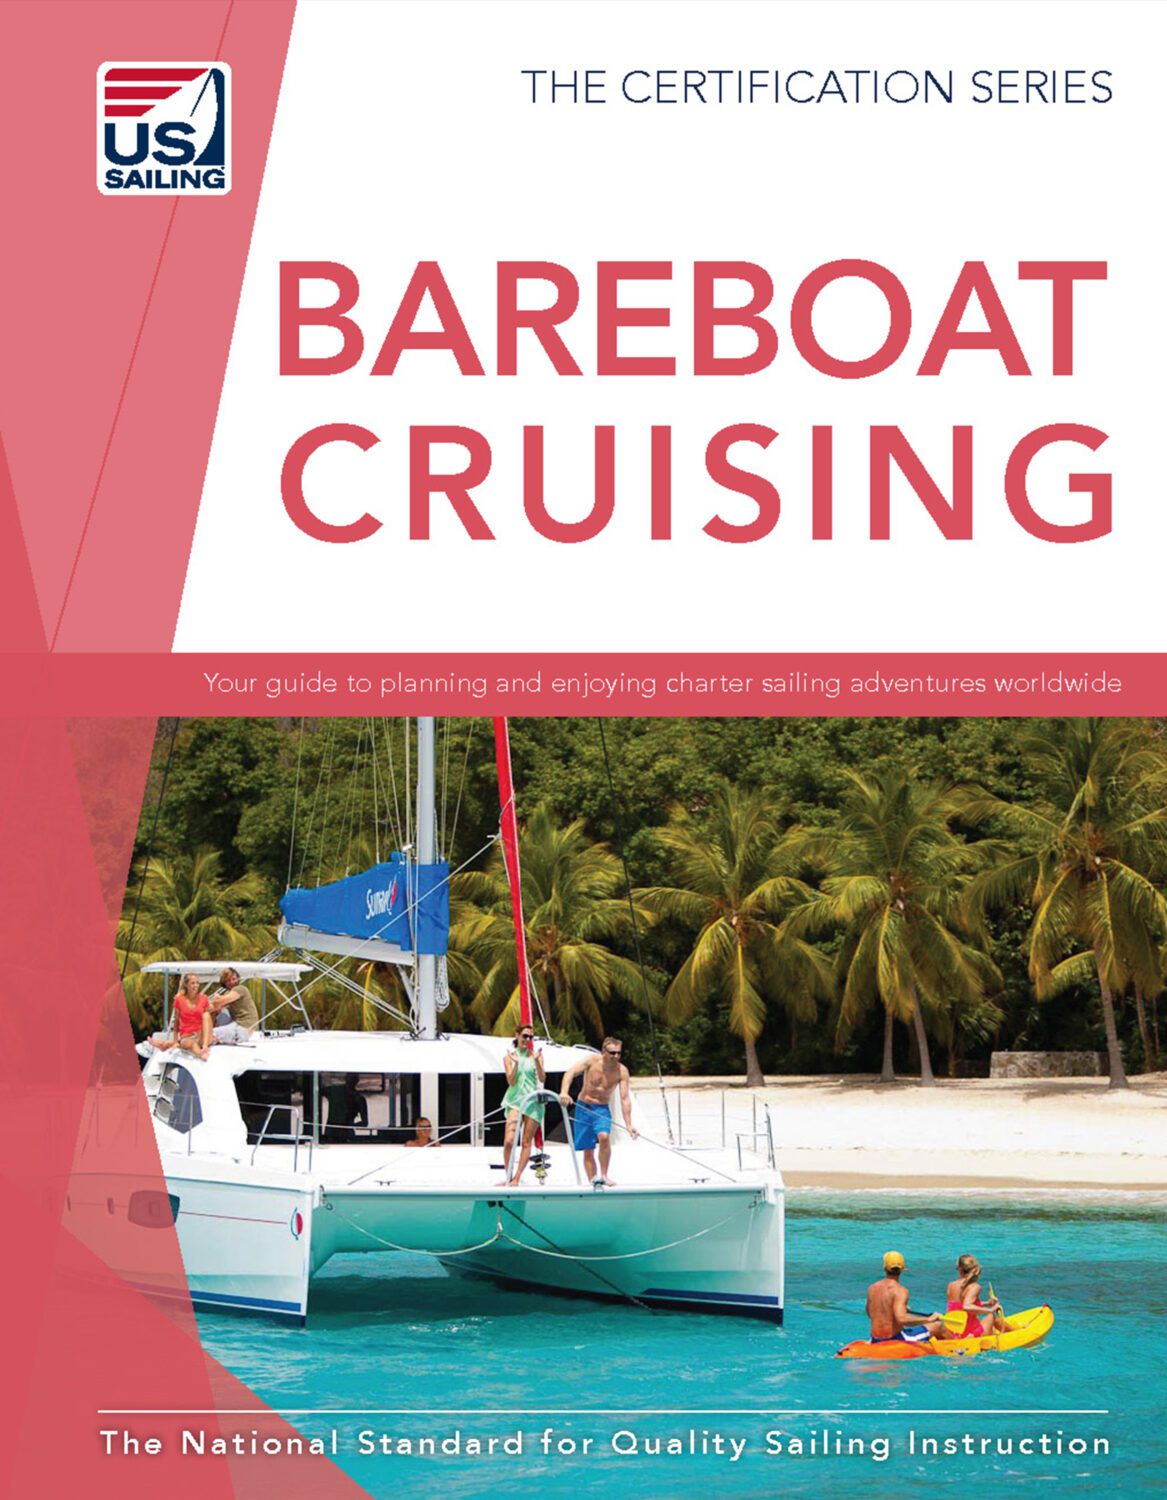 Bareboat Cruising